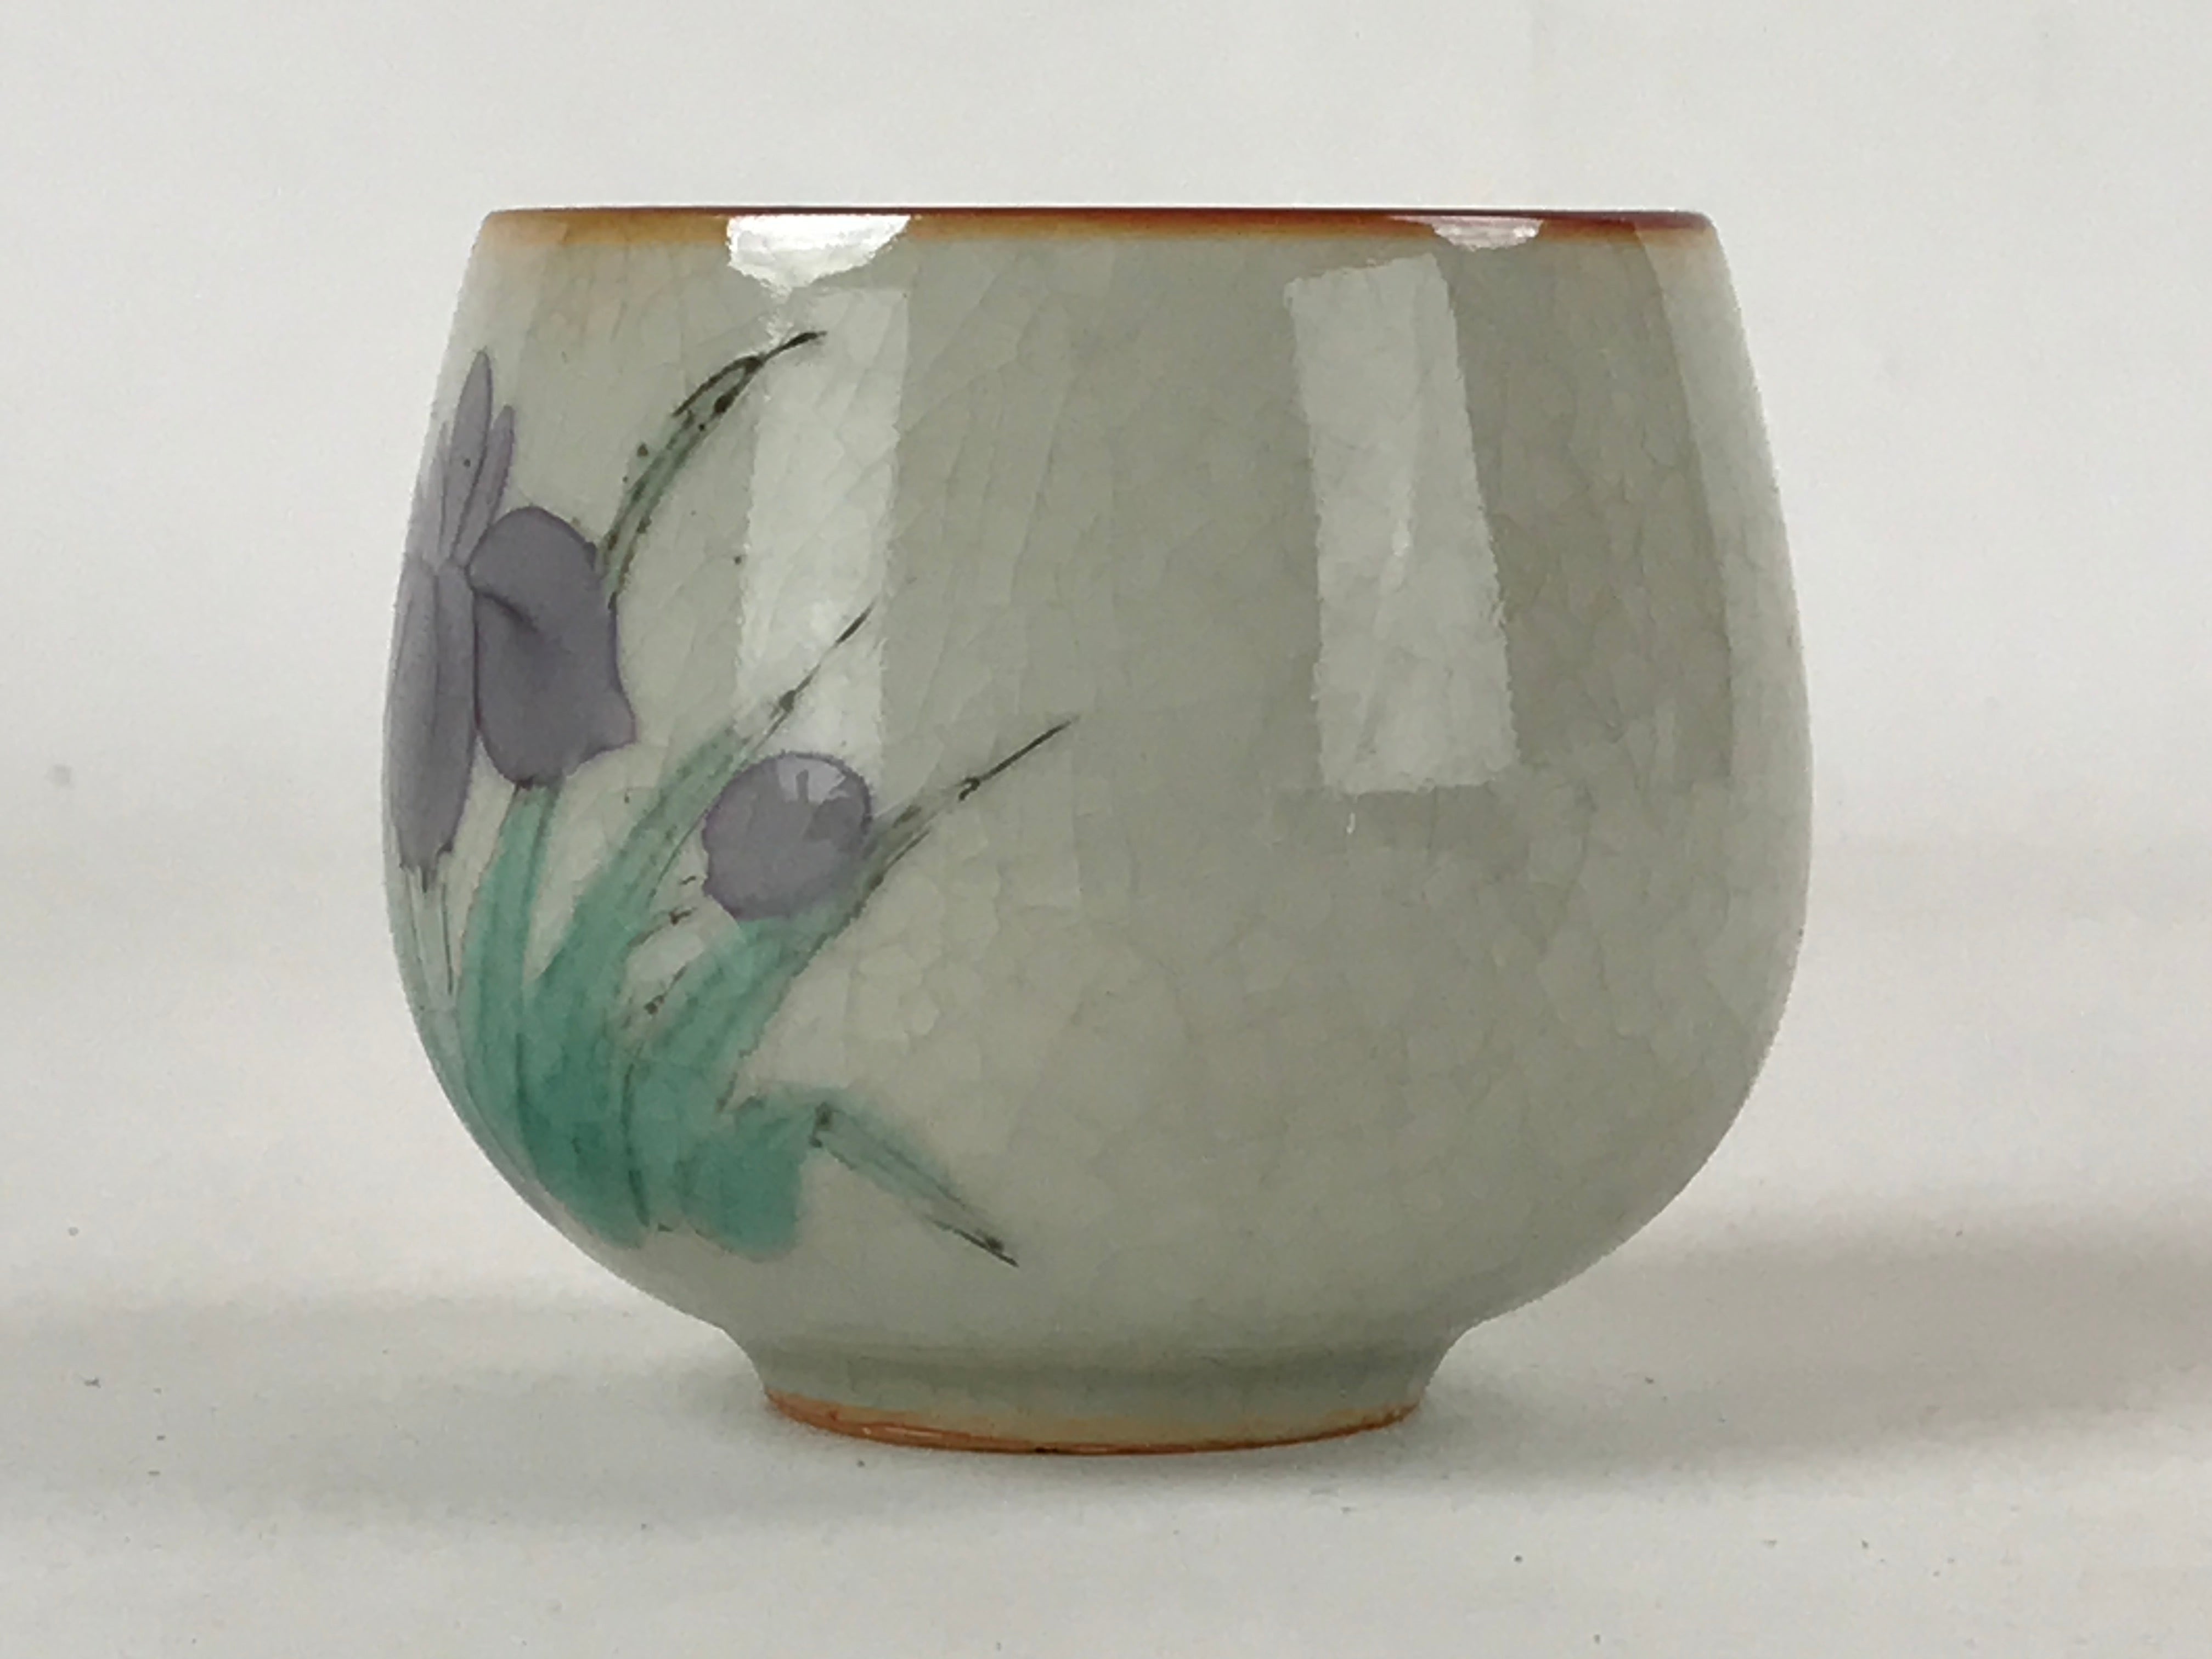 Japanese Ceramic Teacup Vtg Iris Flower Crackle Glaze White Yunomi Sencha TC407